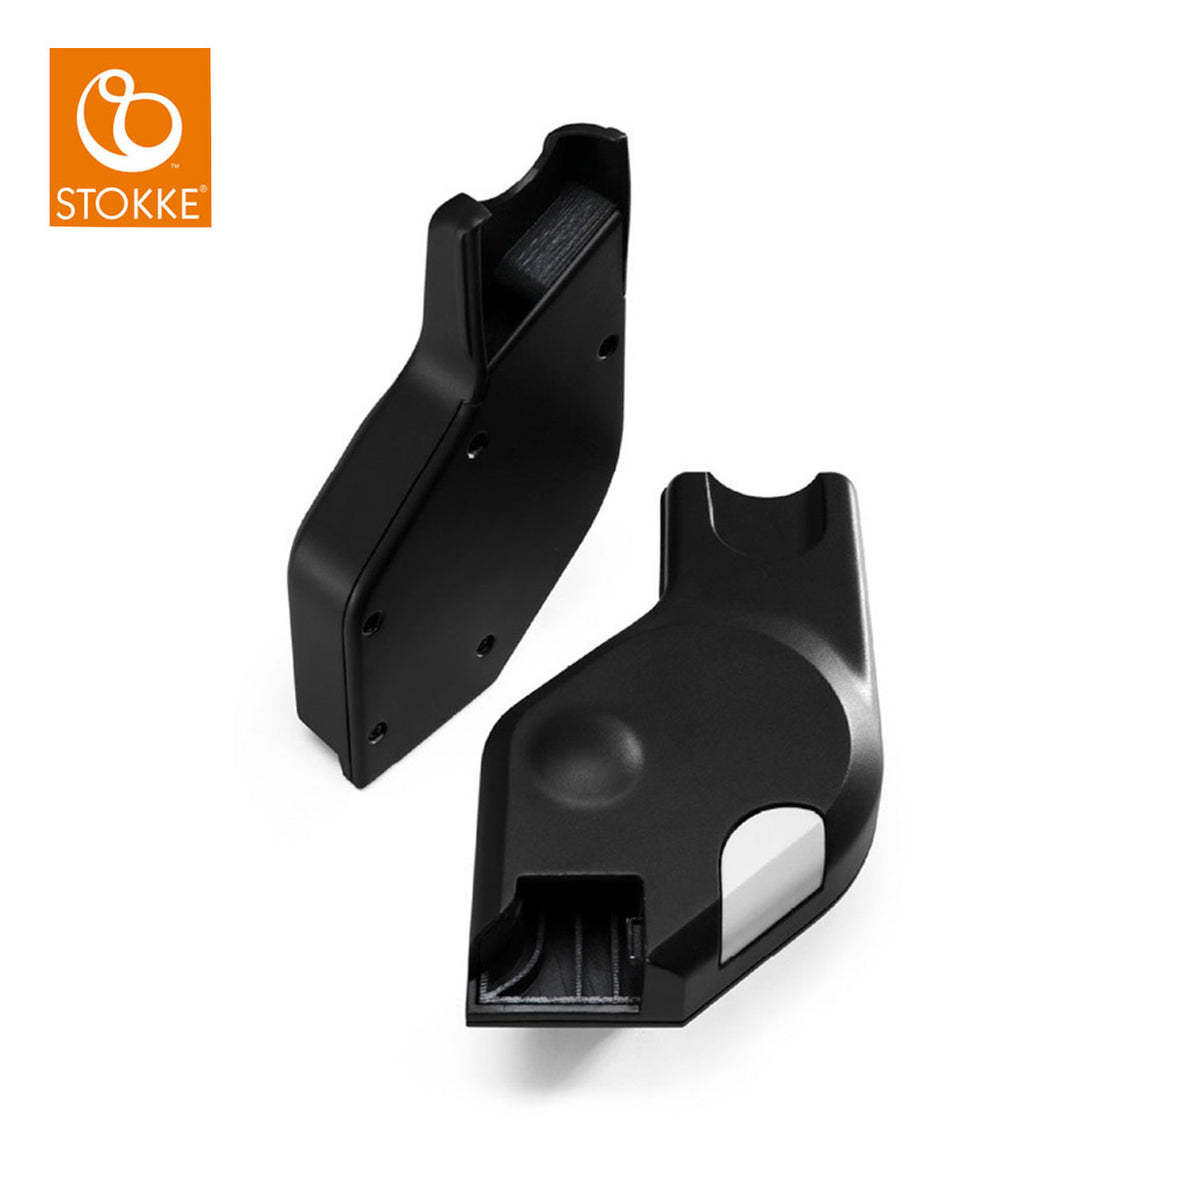 Stokke Autositzadapter Multi black für Xplory, Trailz, Scoot und Beat